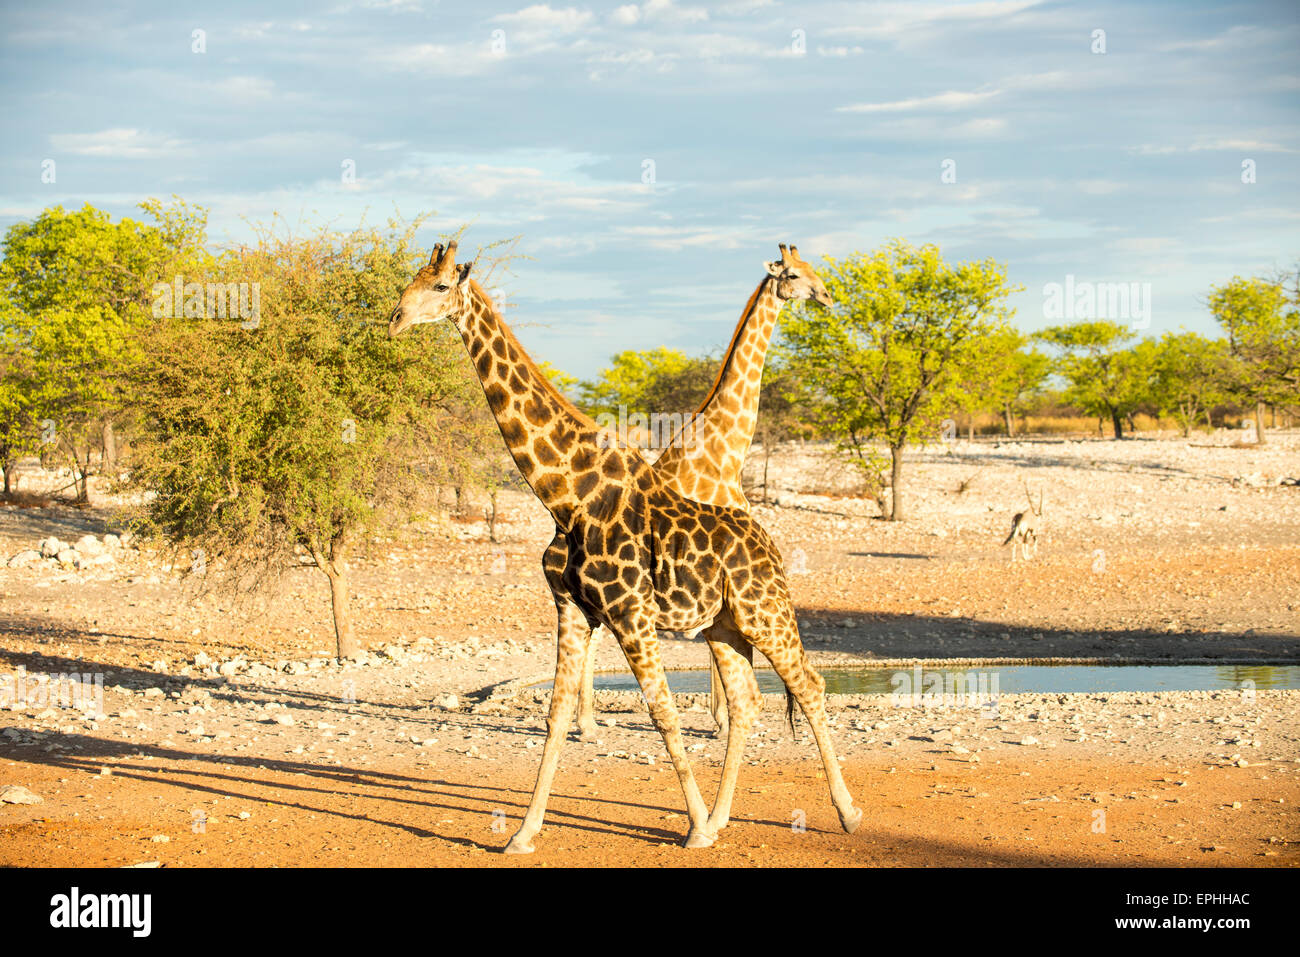 Africa, Namibia. Anderson Camp near Etosha National Park. full body image of two giraffes walking. Stock Photo